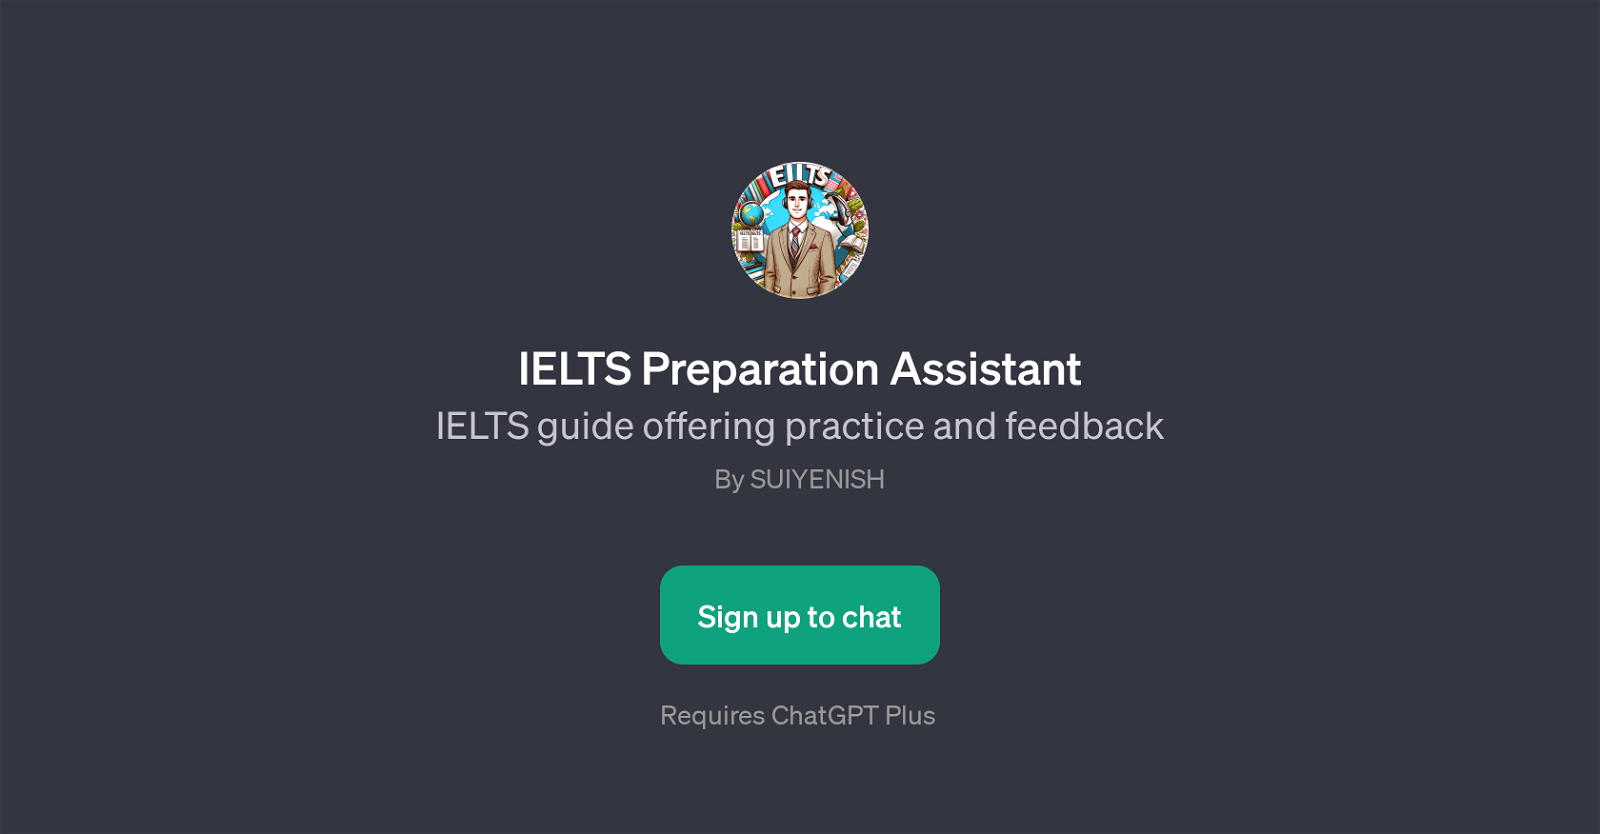 IELTS Preparation Assistant website